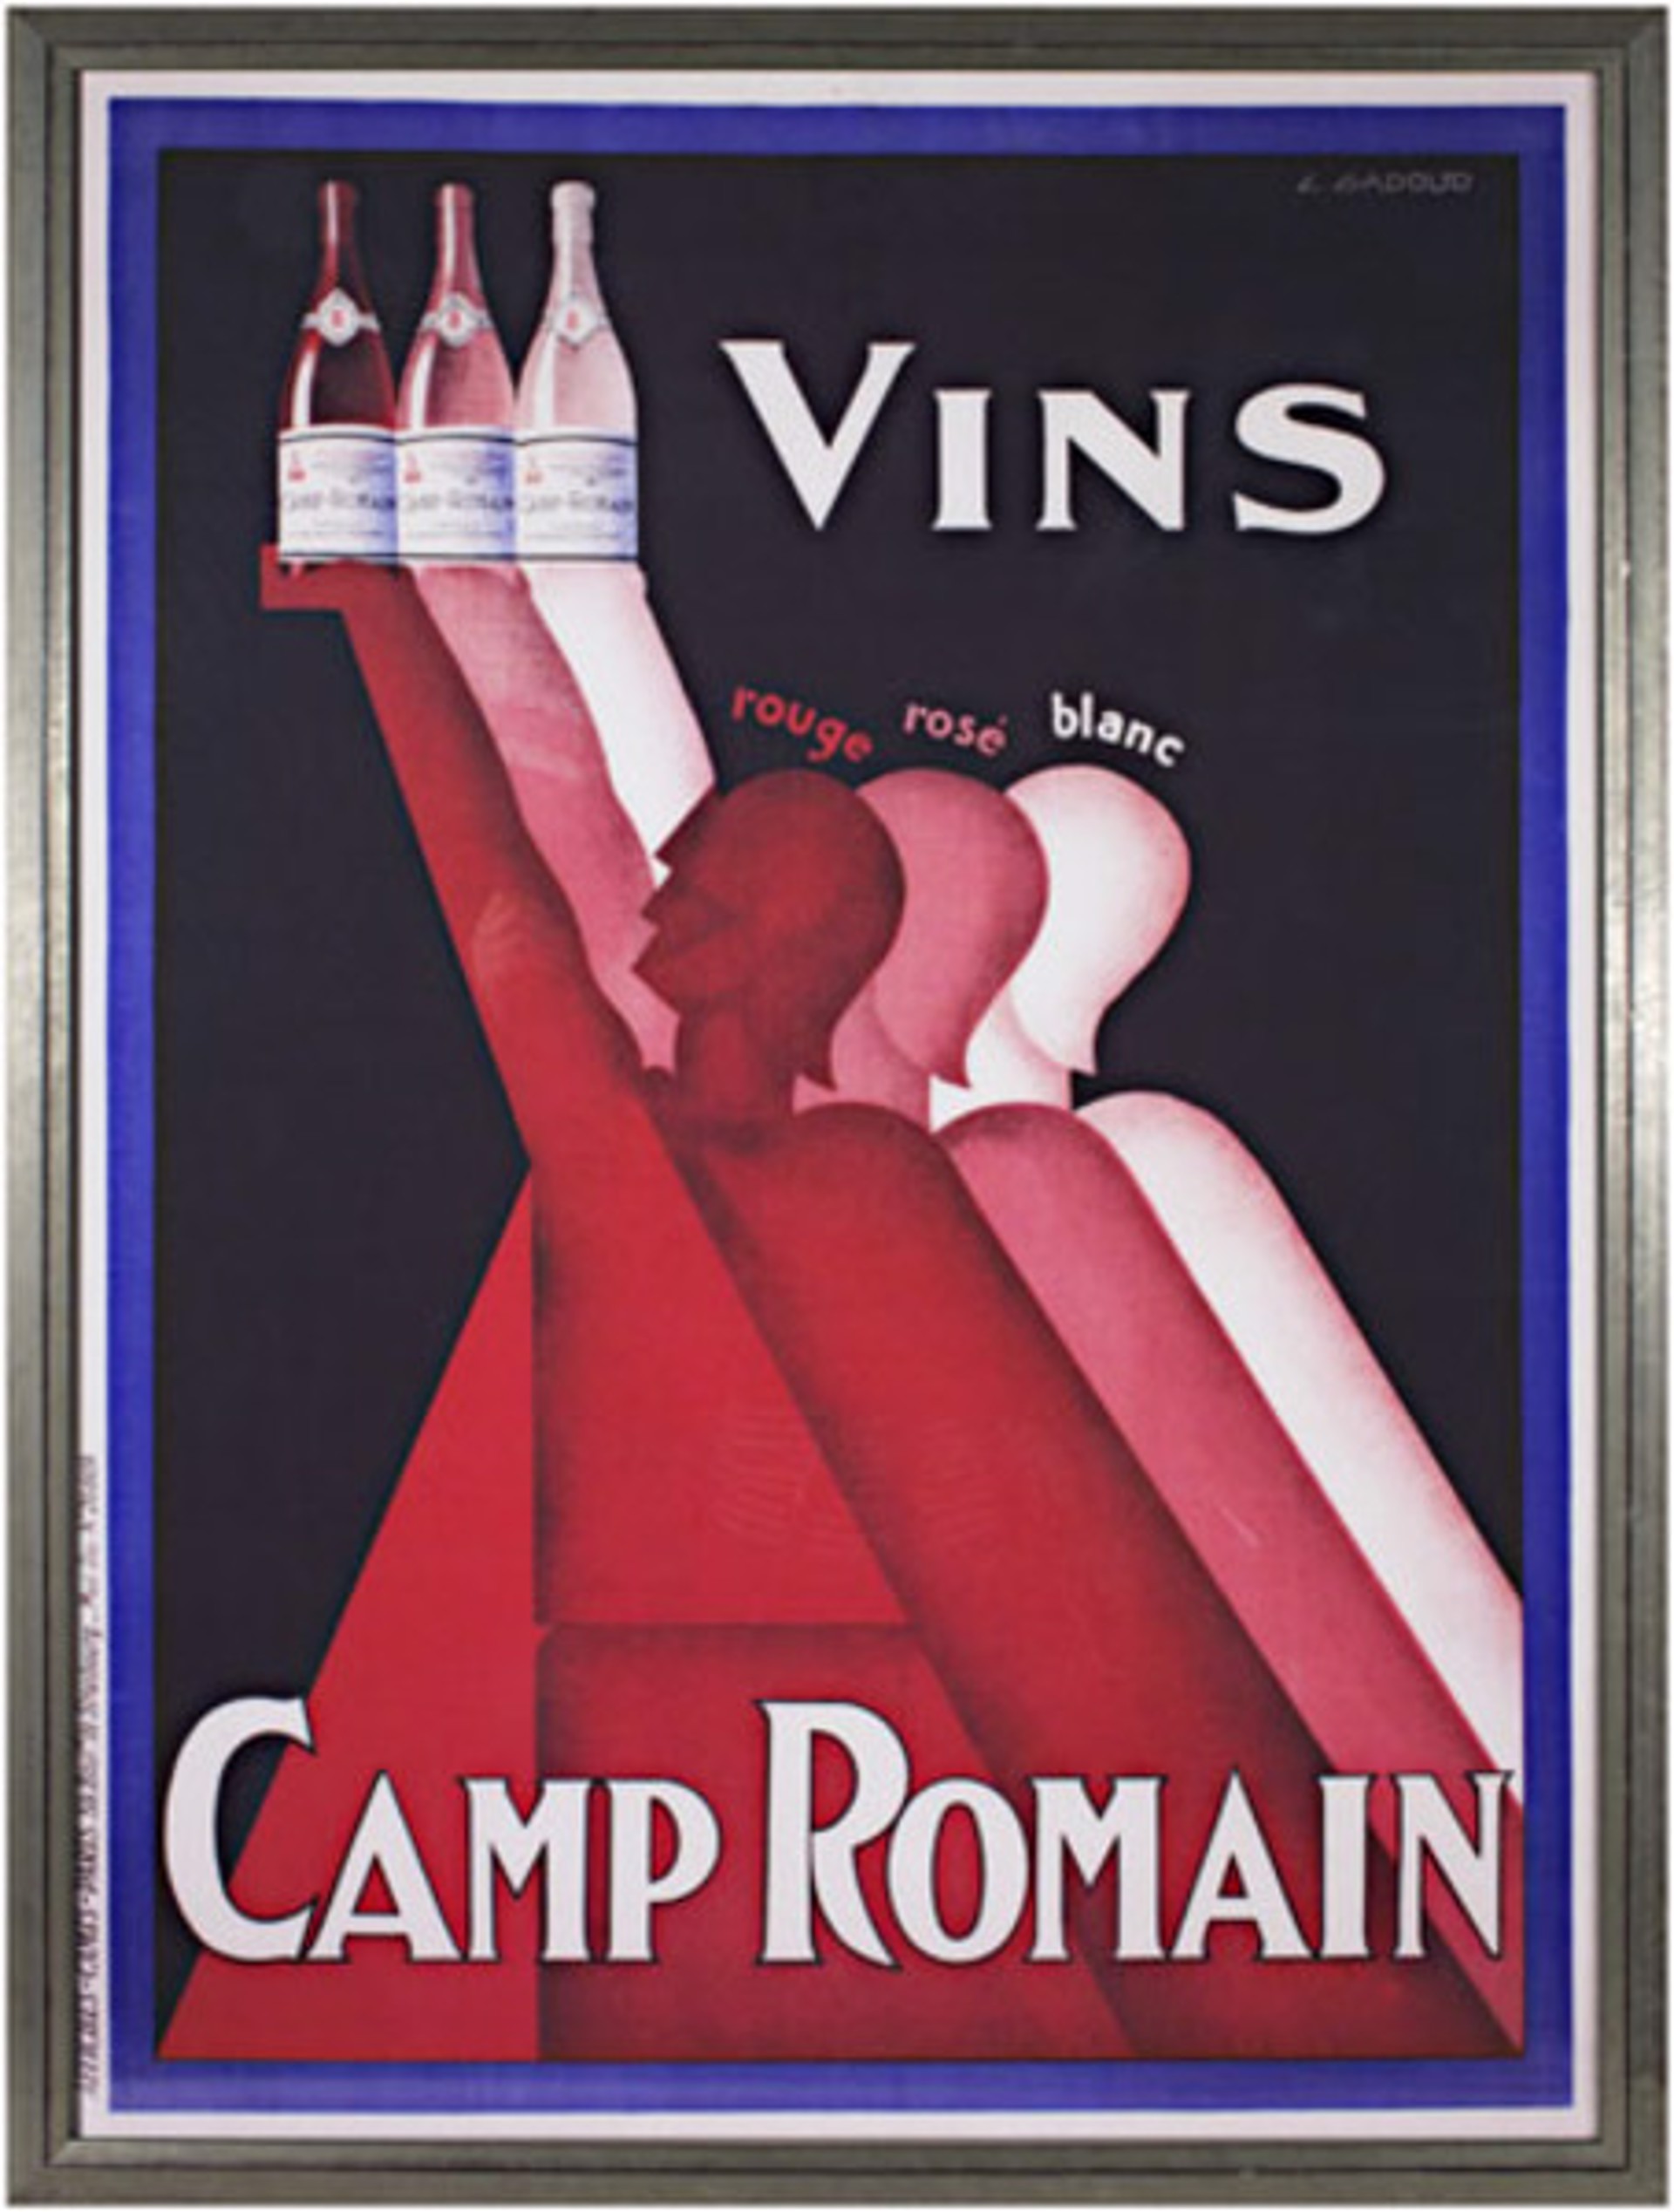 Vins - Camp Romain by Claude Gadoud